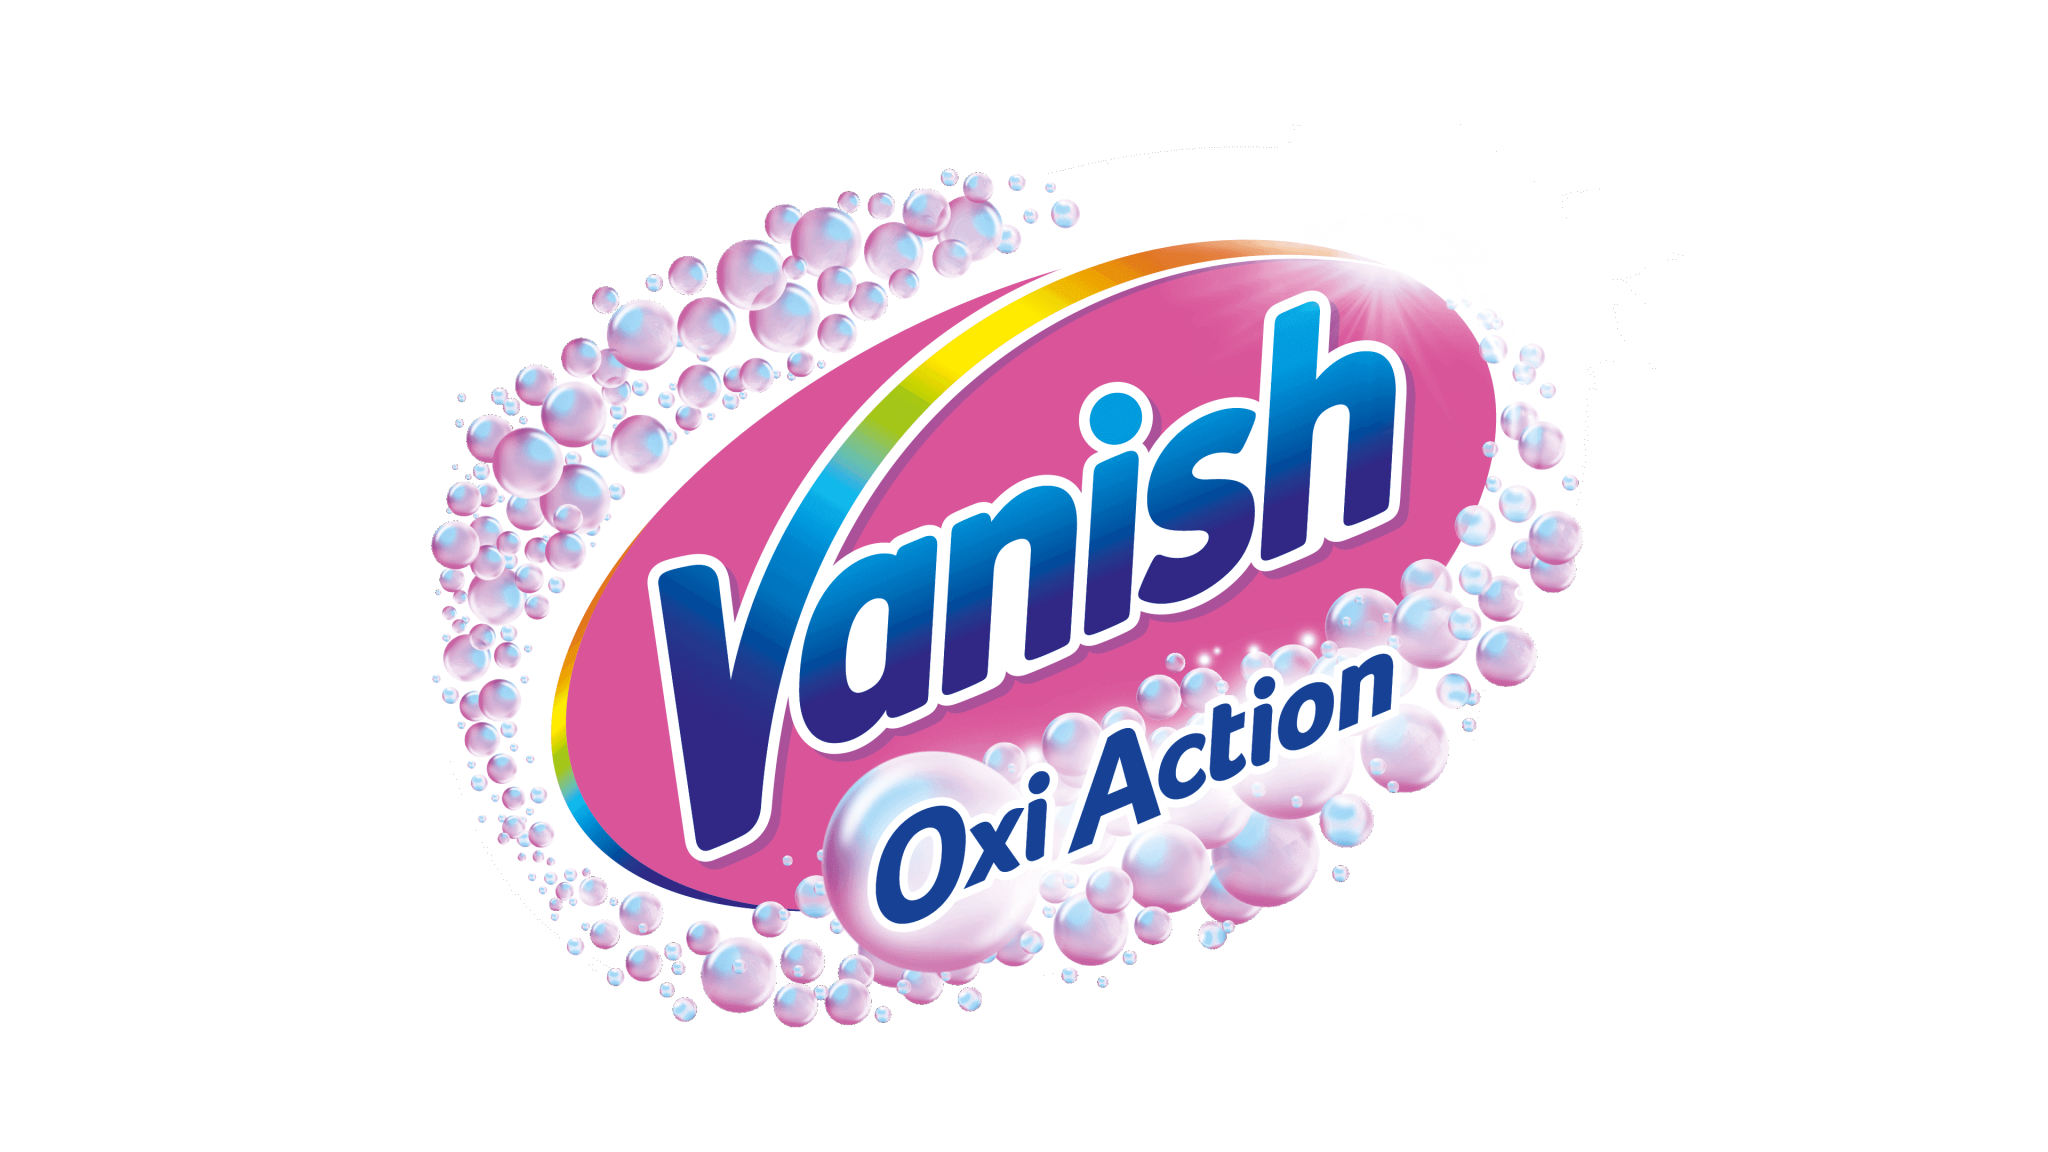 vanish meaning